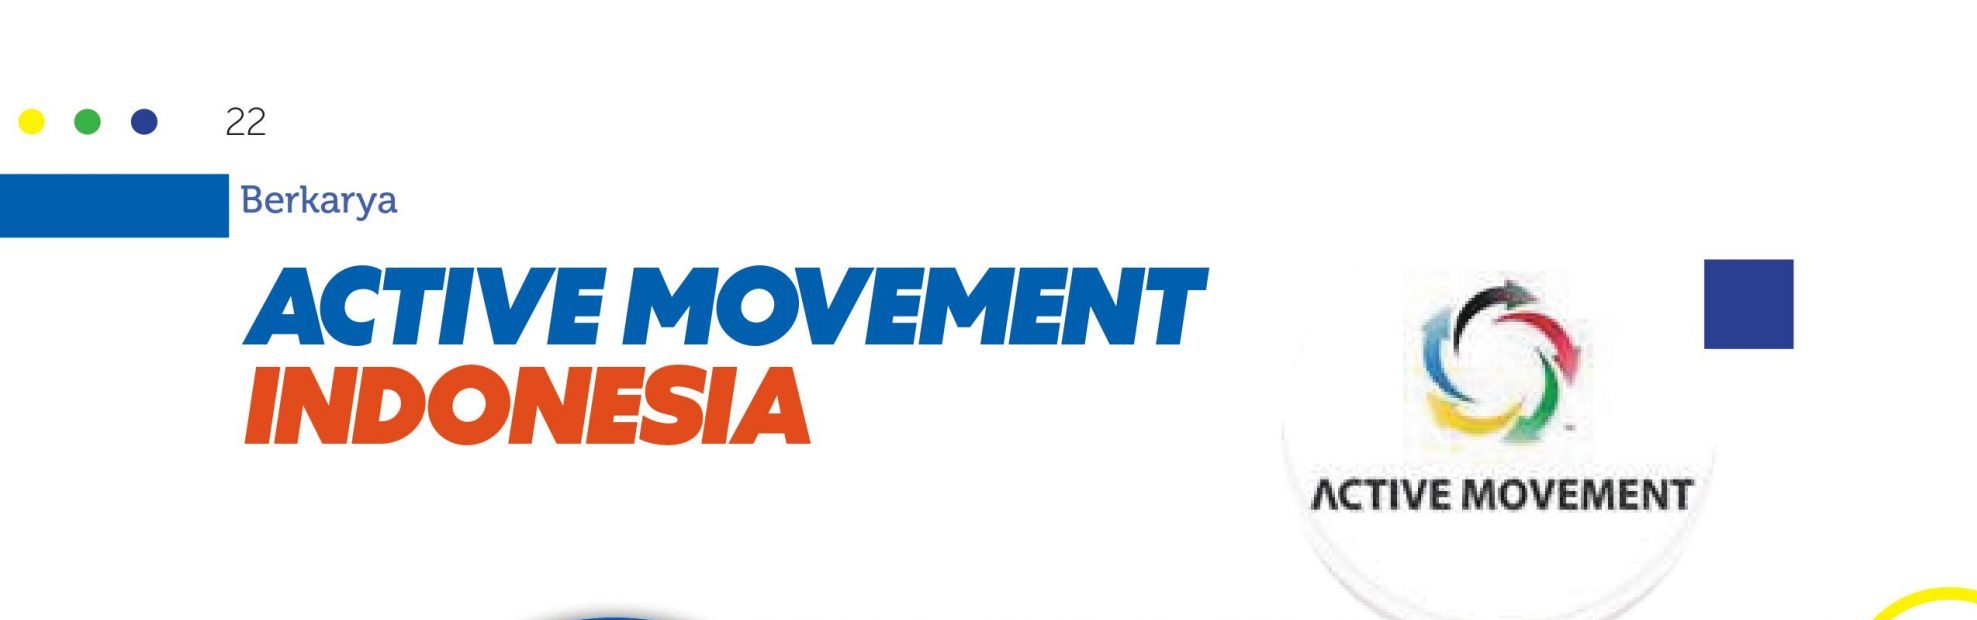 ACTIVE MOVEMENT INDONESIA